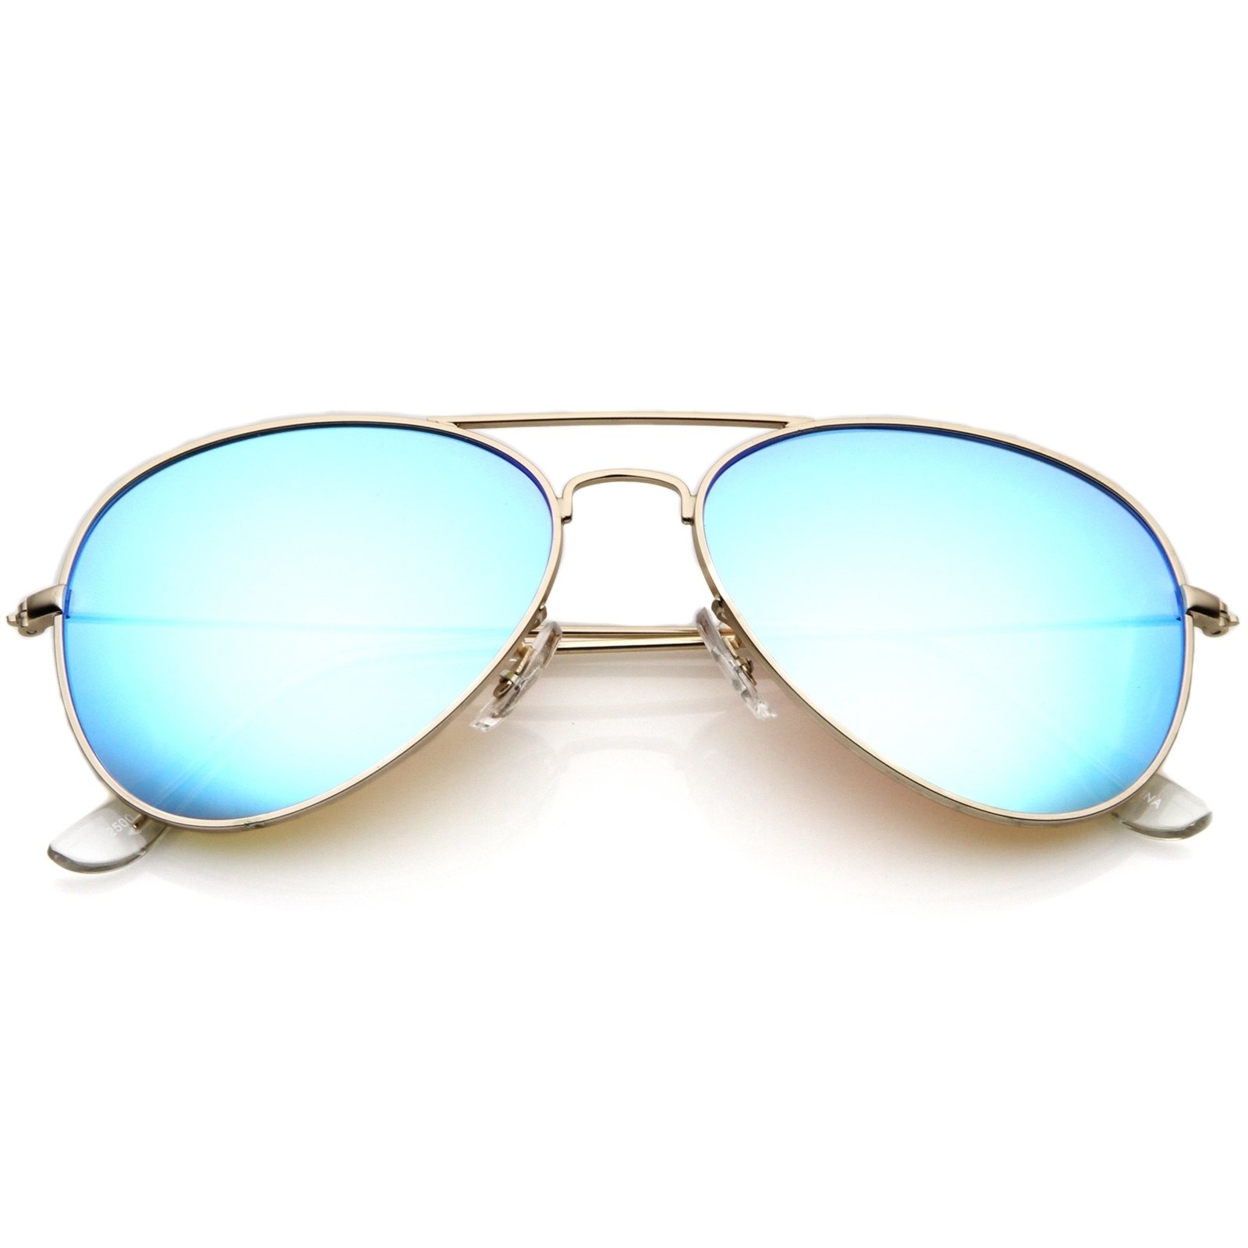 Premium Nickel Plated Frame Multi-Coated Mirror Lens Aviator Sunglasses 59mm - Gold / Yellow Mirror